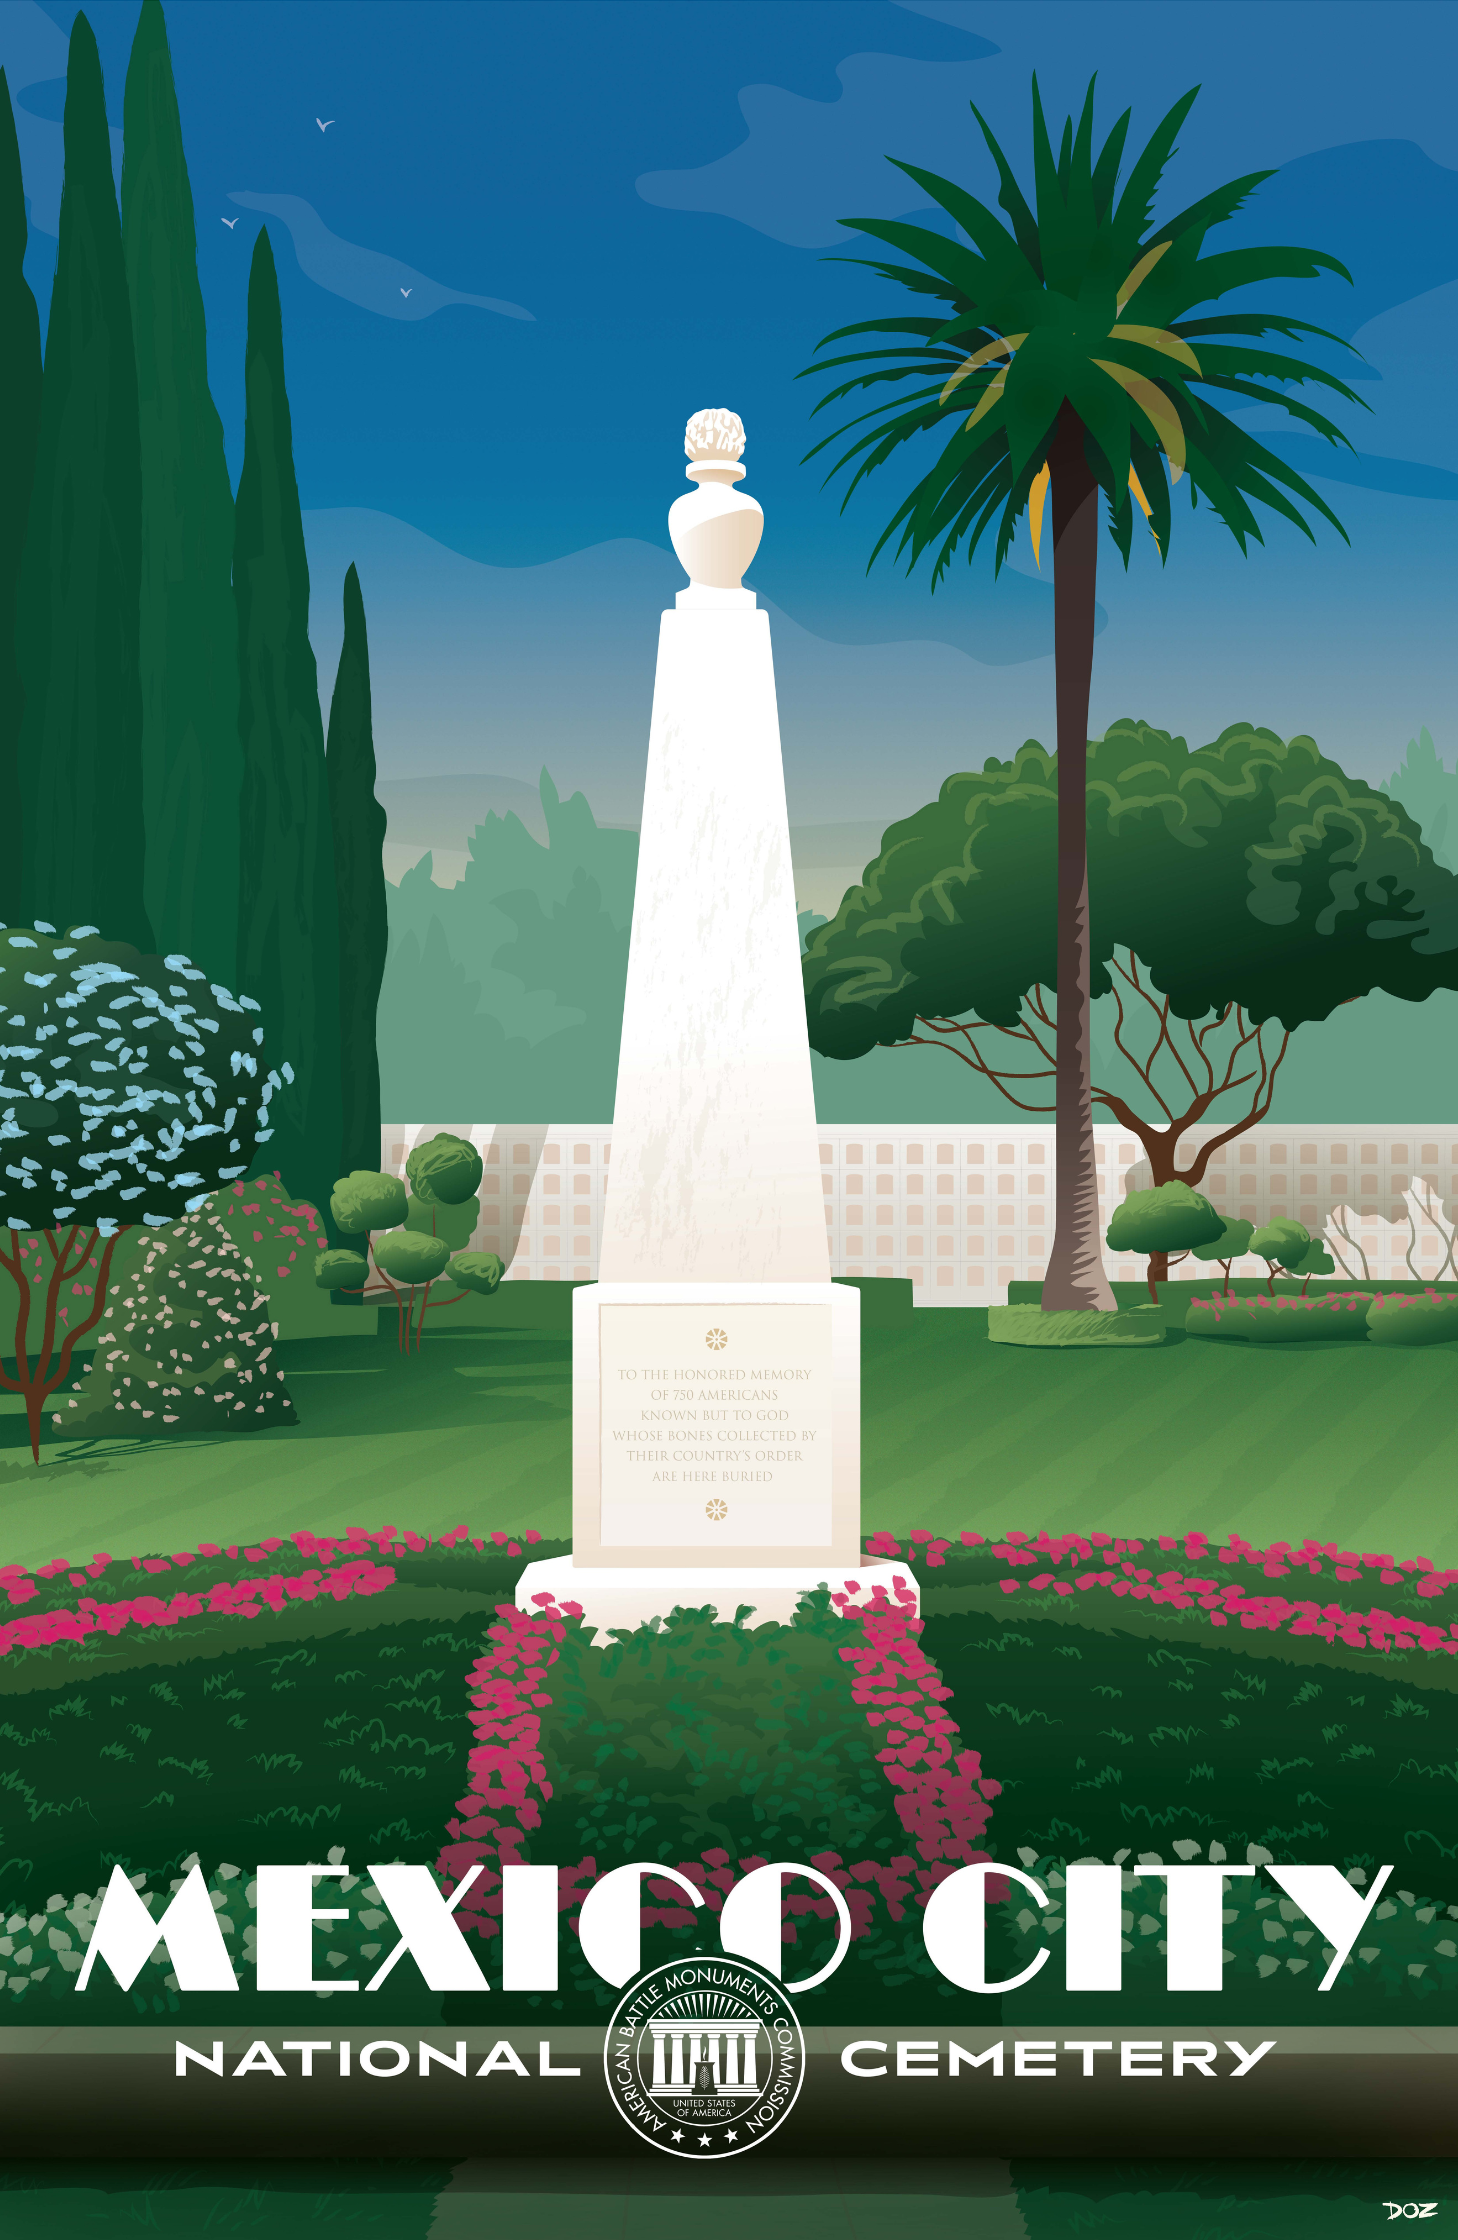 Vintage poster of Mexico City National Cemetery created to mark ABMC Centennial